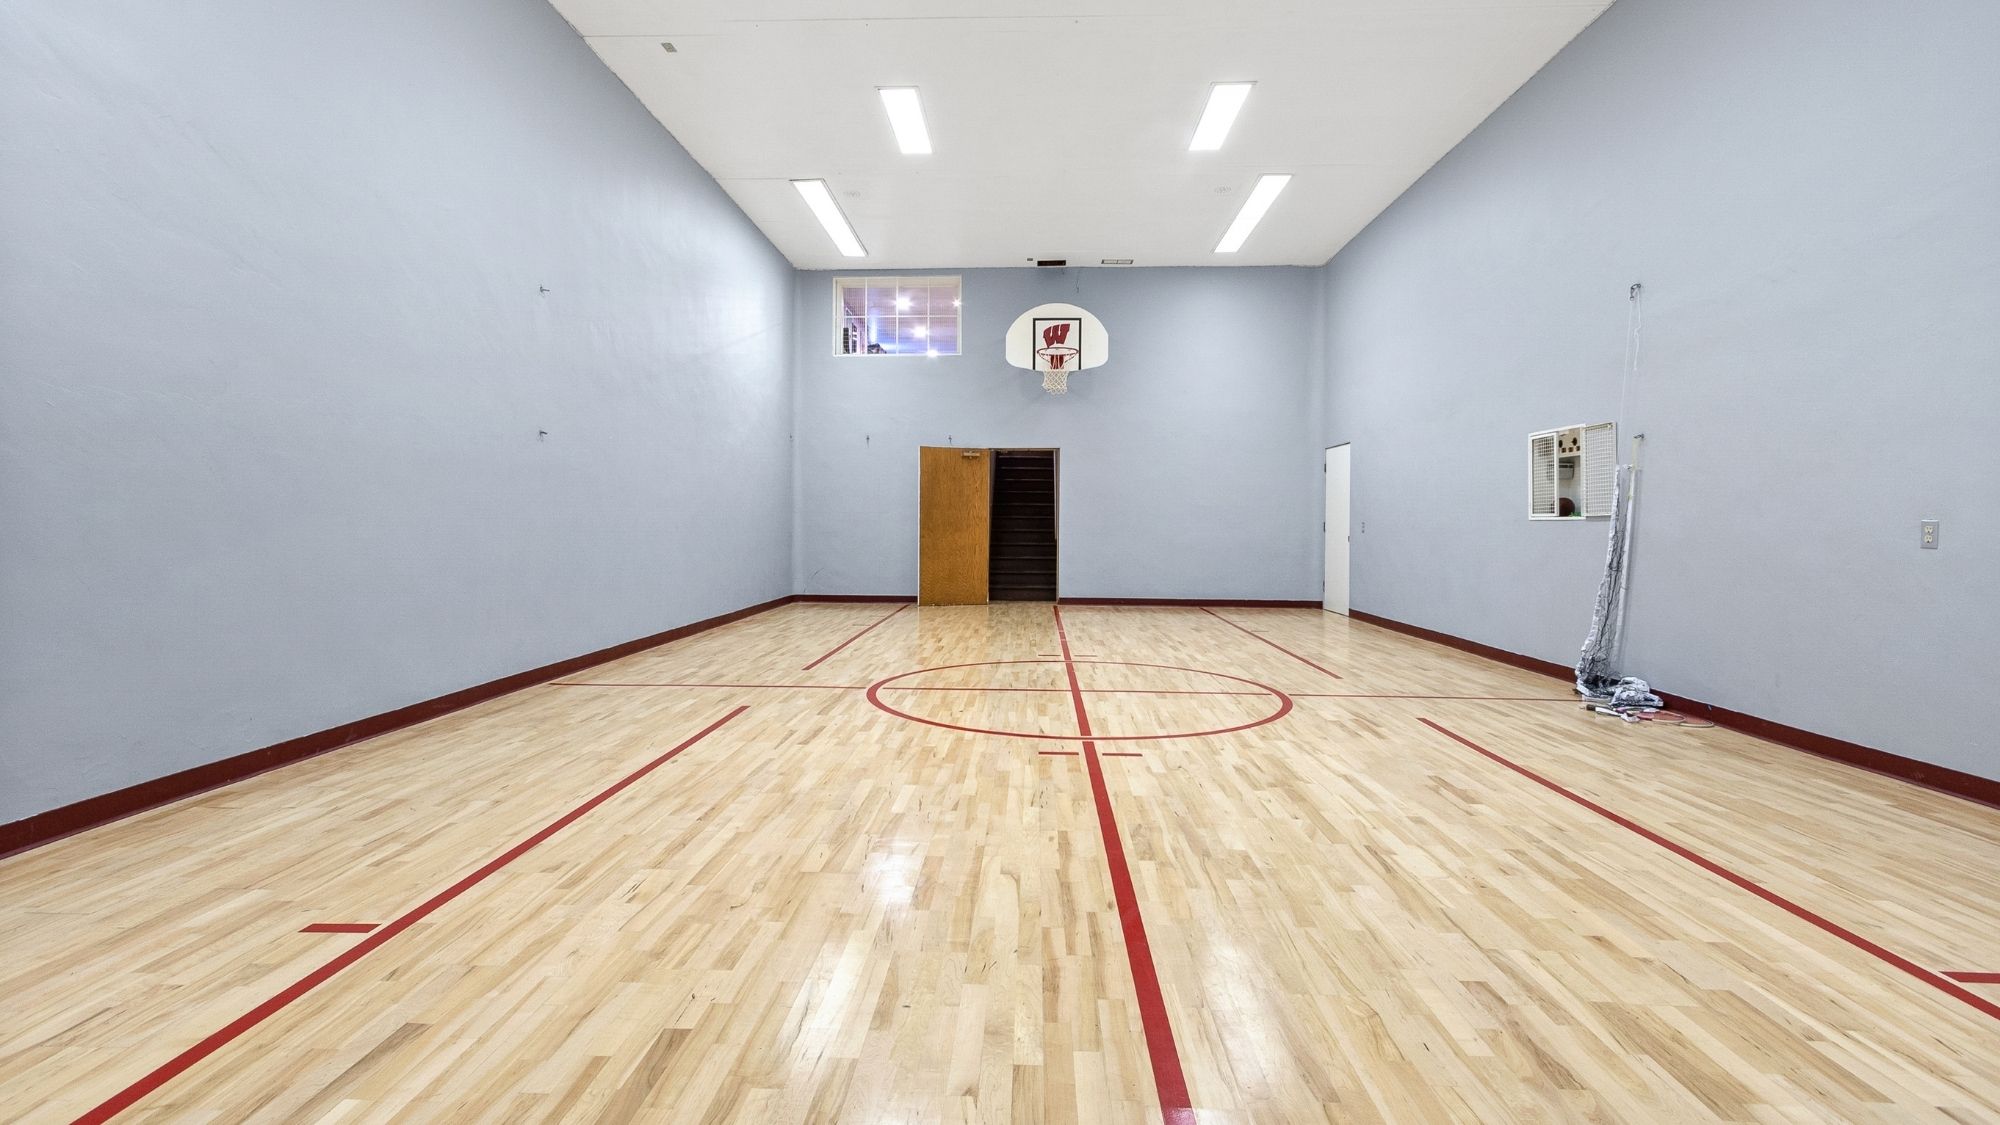 Preble Hills Basketball Court 2